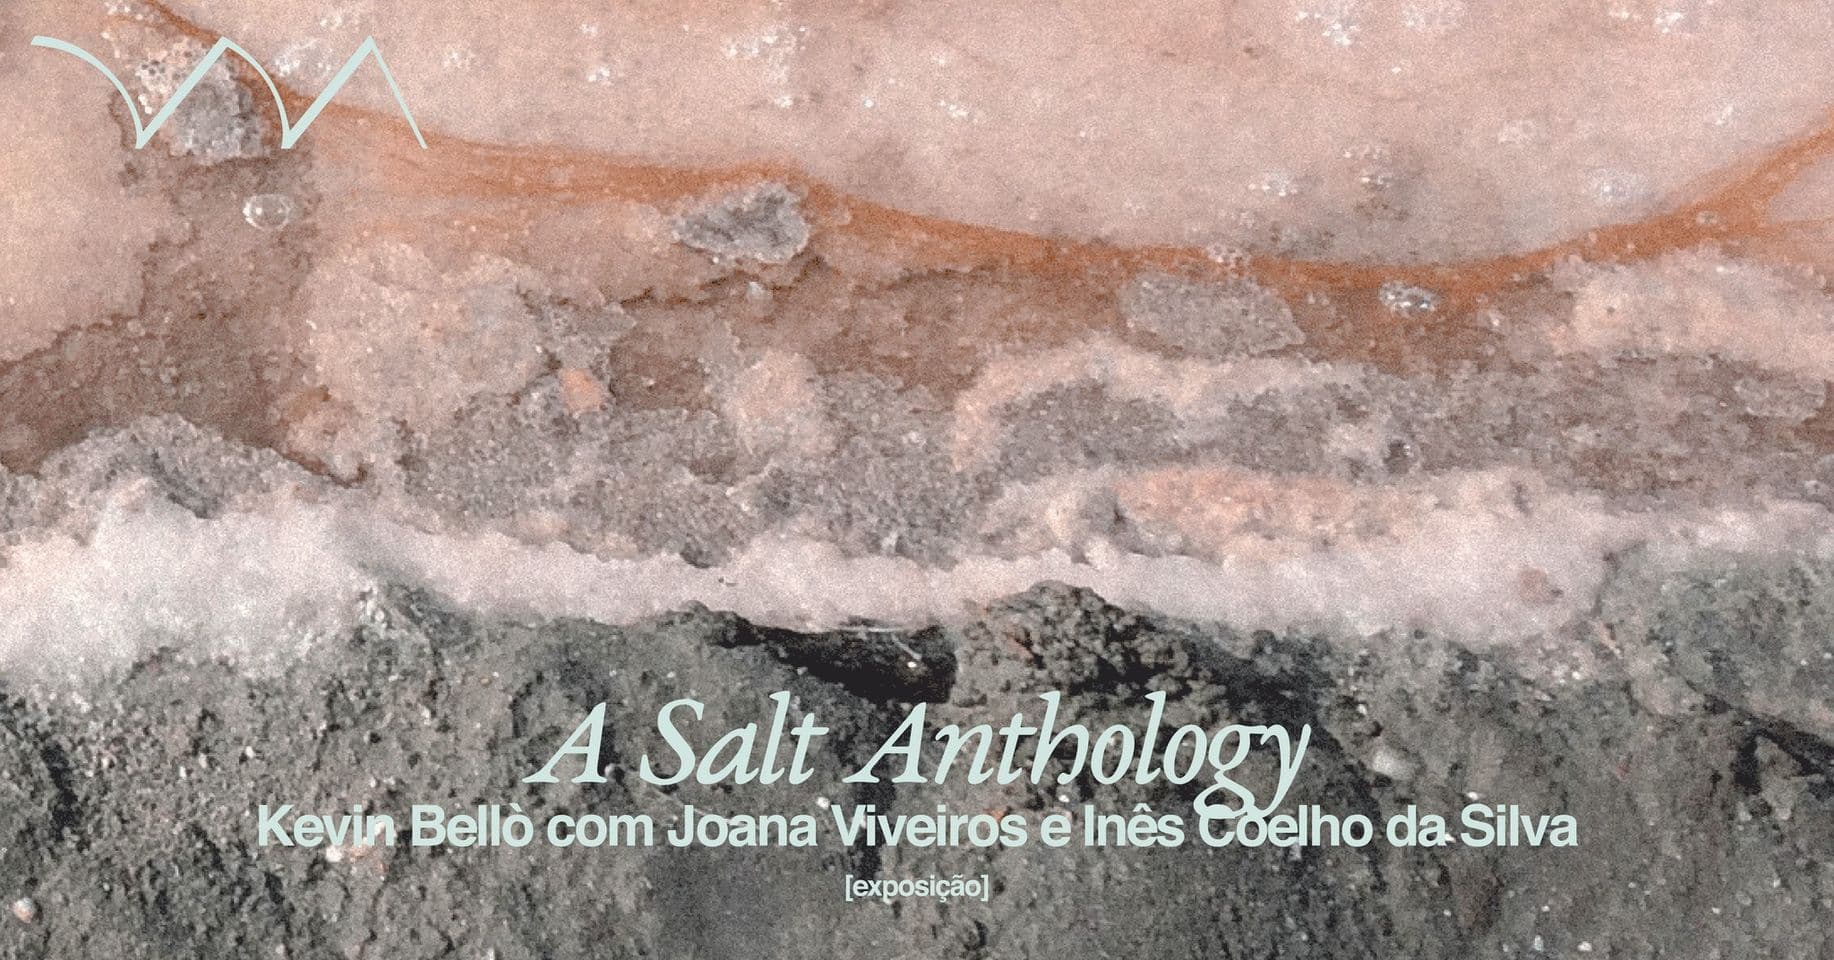 A Salt Anthology ❉ Kevin Bellò + Joana Viveiros e Inês Coelho da Silva (1)